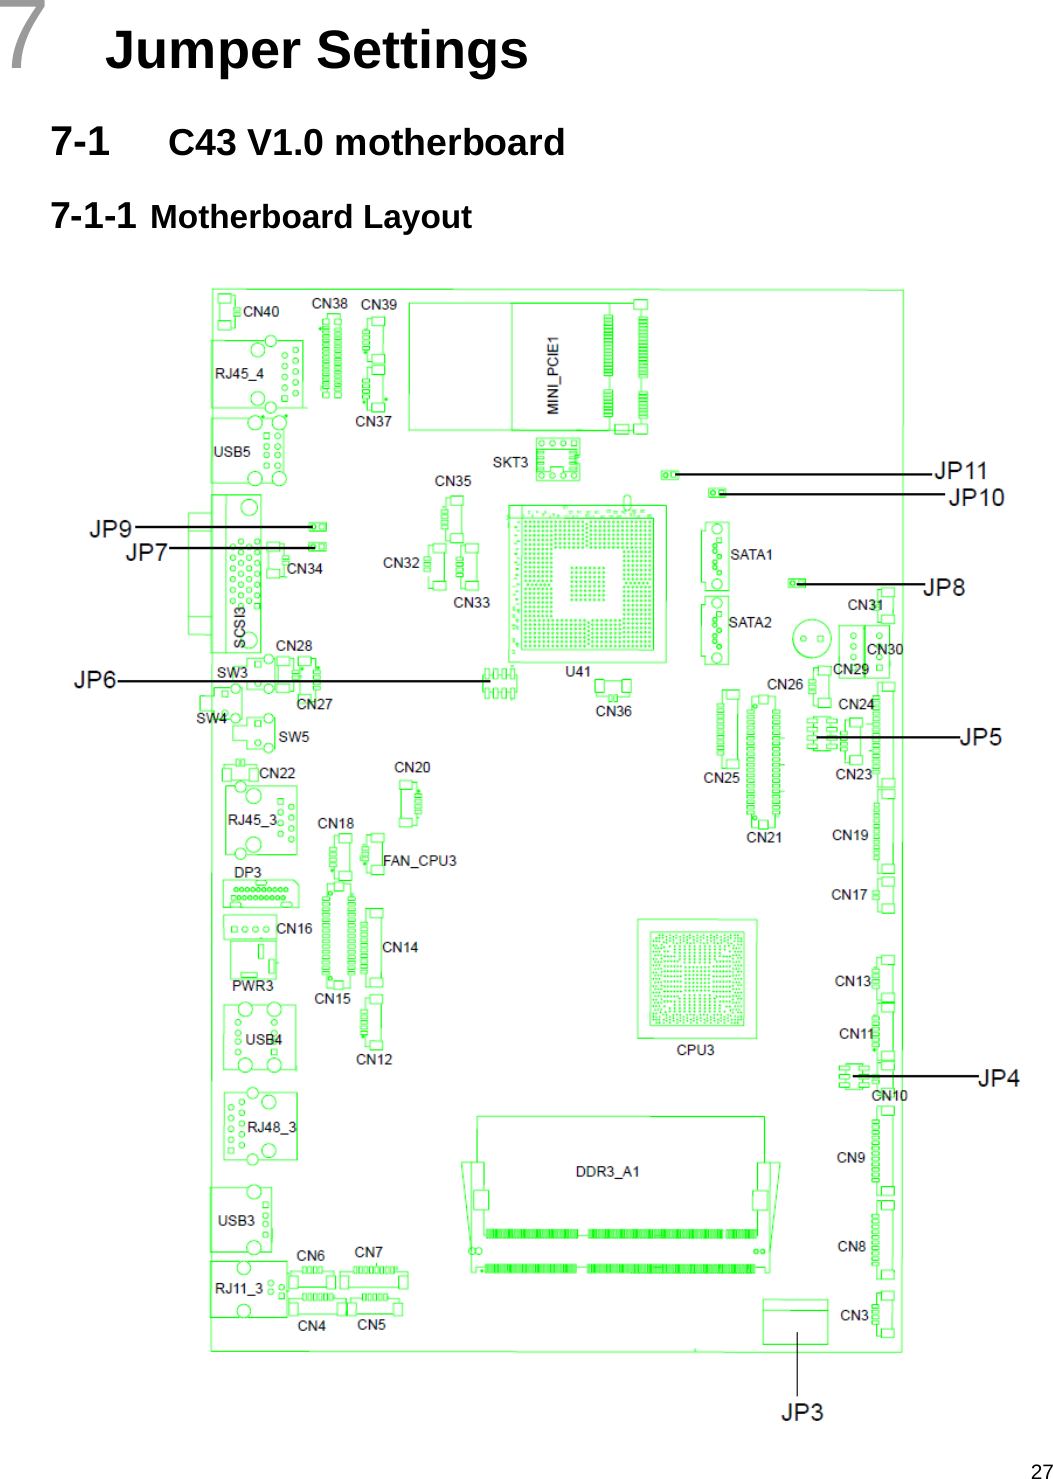  277  Jumper Settings 7-1  C43 V1.0 motherboard 7-1-1 Motherboard Layout  